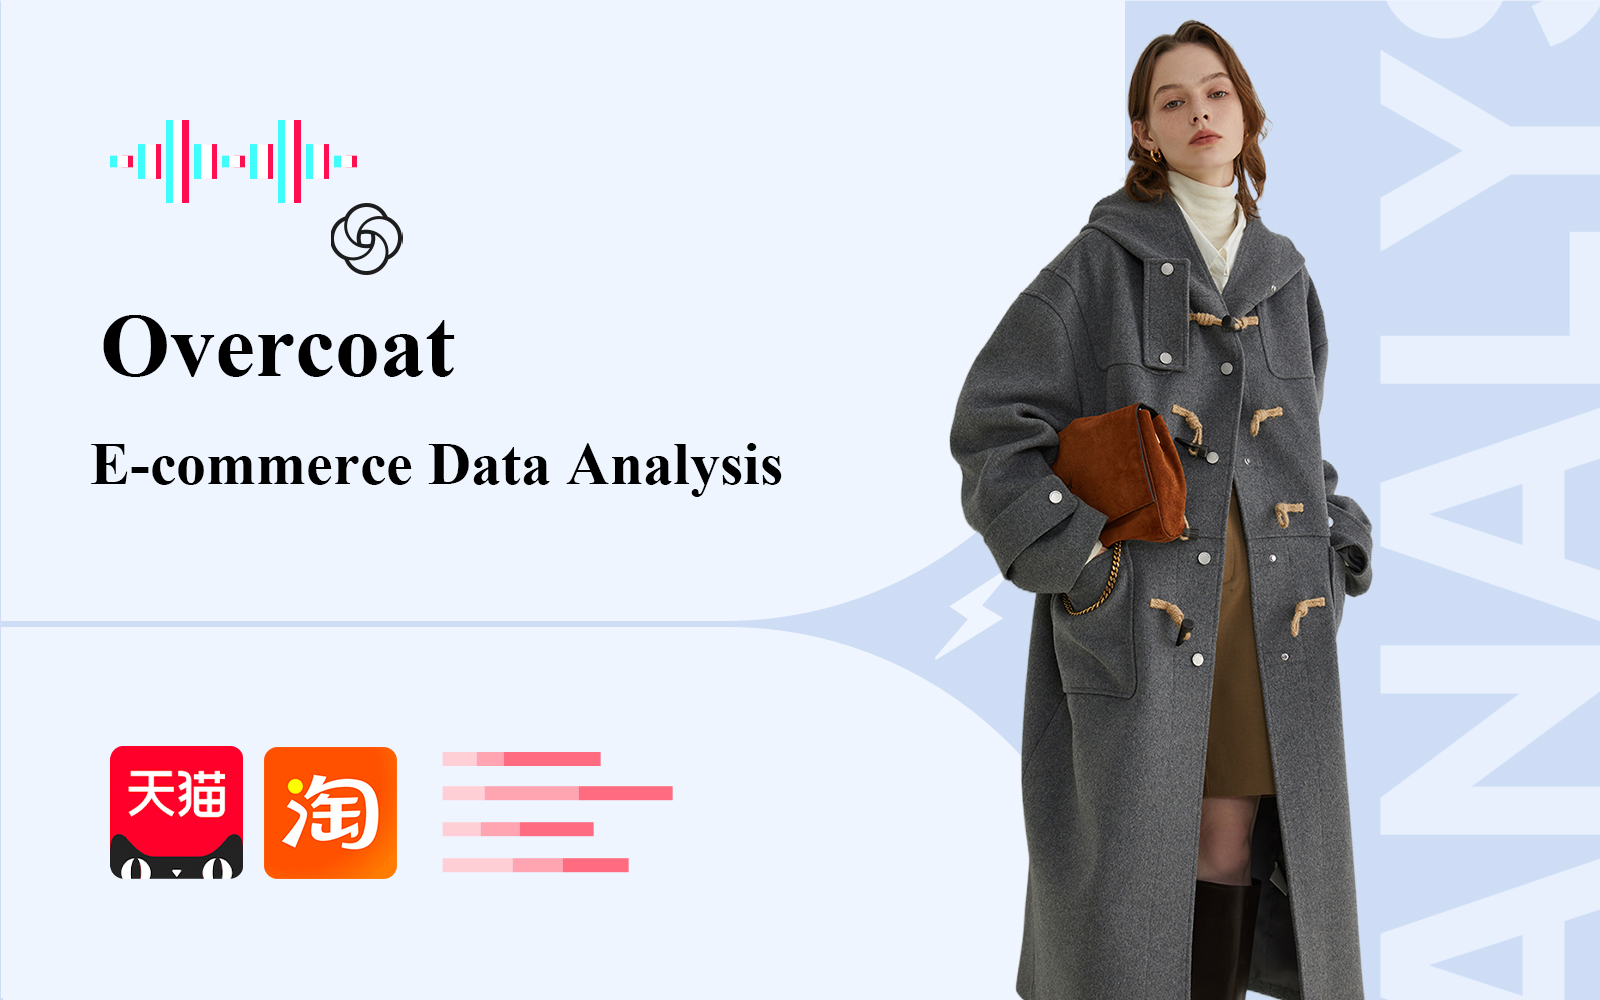 Overcoat -- The Data Analysis of Womenswear E-commerce